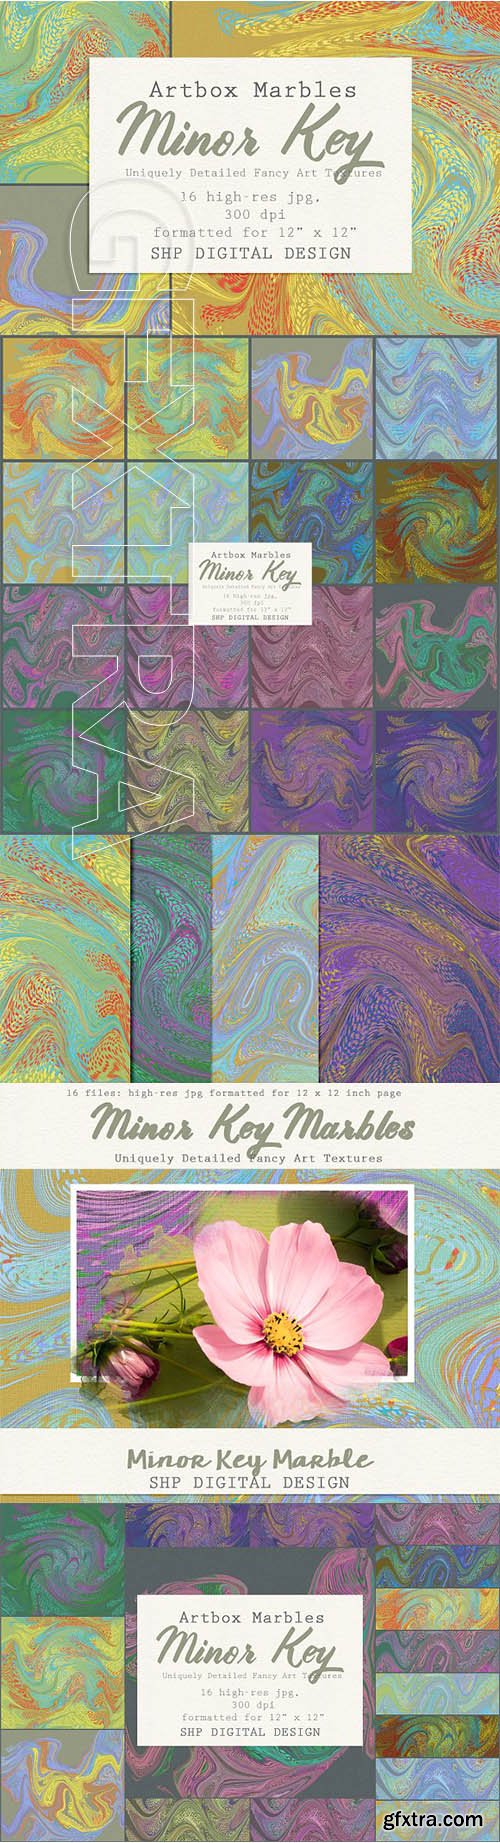 CreativeMarket - Art Textures Marbled Minor Key 2266472